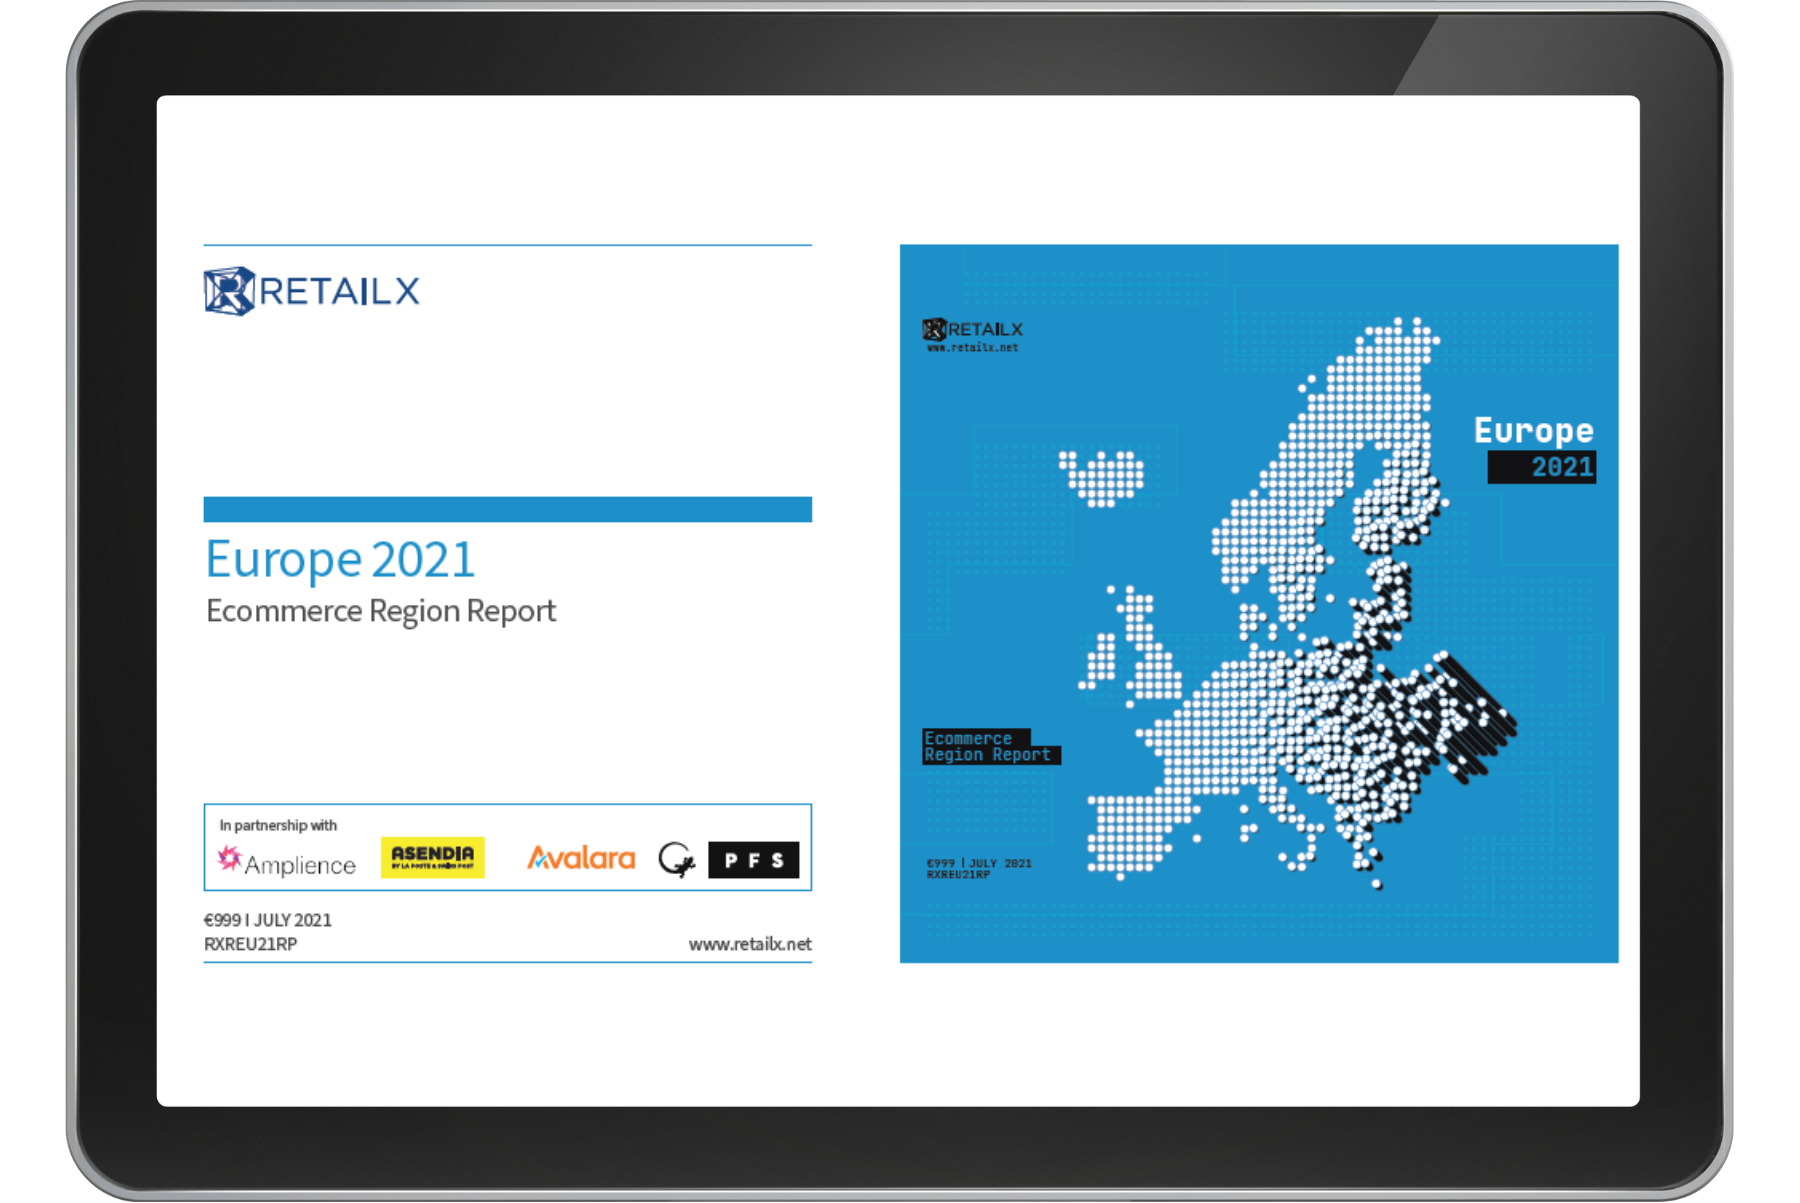 Europe 2021 e-commerce region report